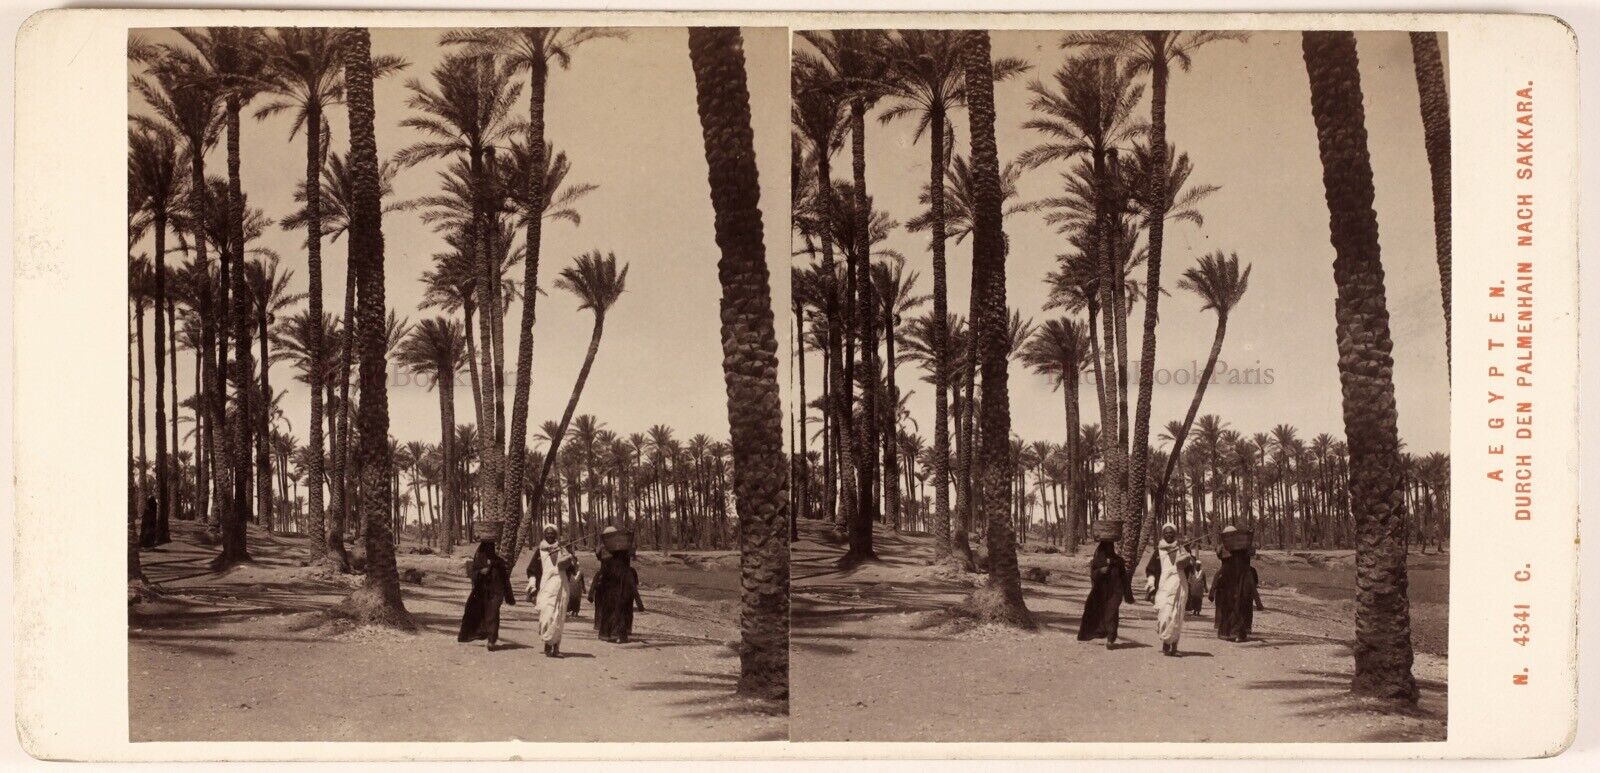 Saqqara Egypt palmeraie photo alois beer stereo vintage albumen c1880